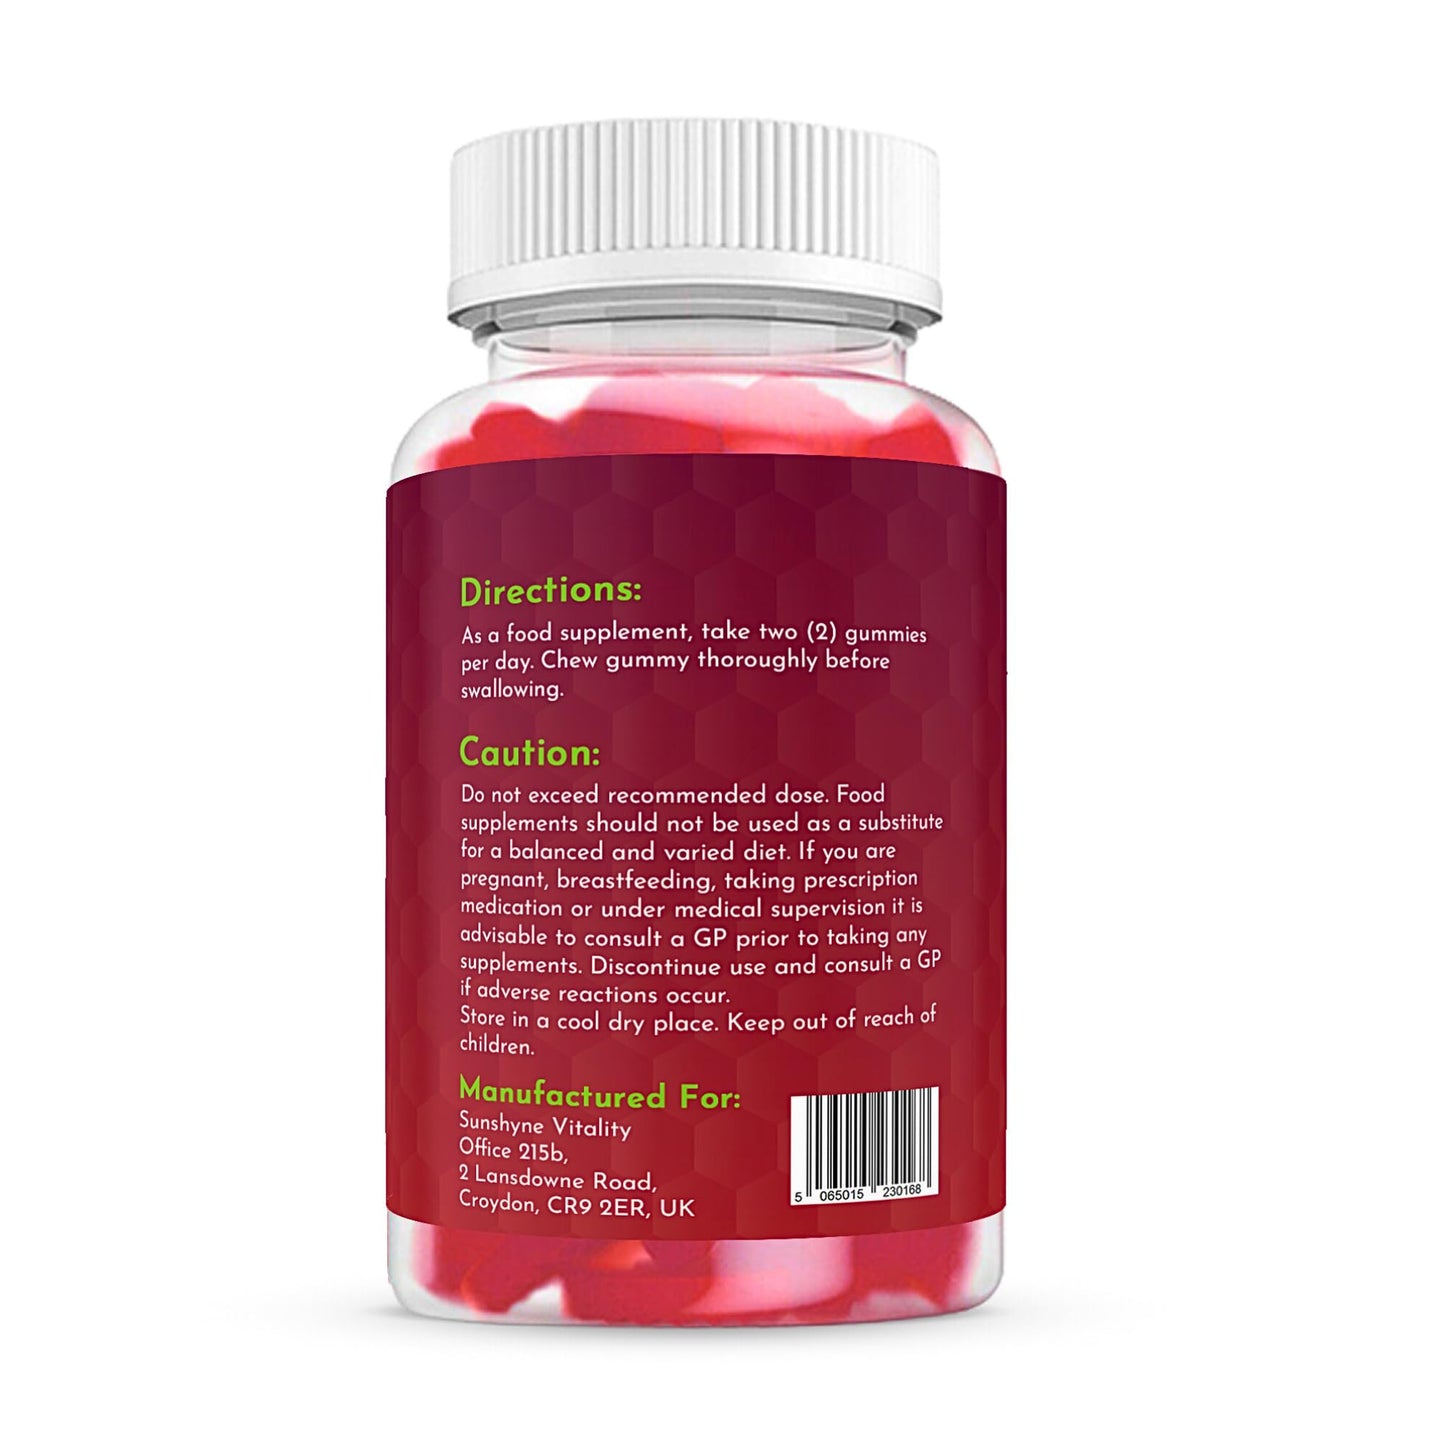 2 Pack Glutathione Gummies | with Marine Collagen | 1050mg per Serving | Antioxidant Support